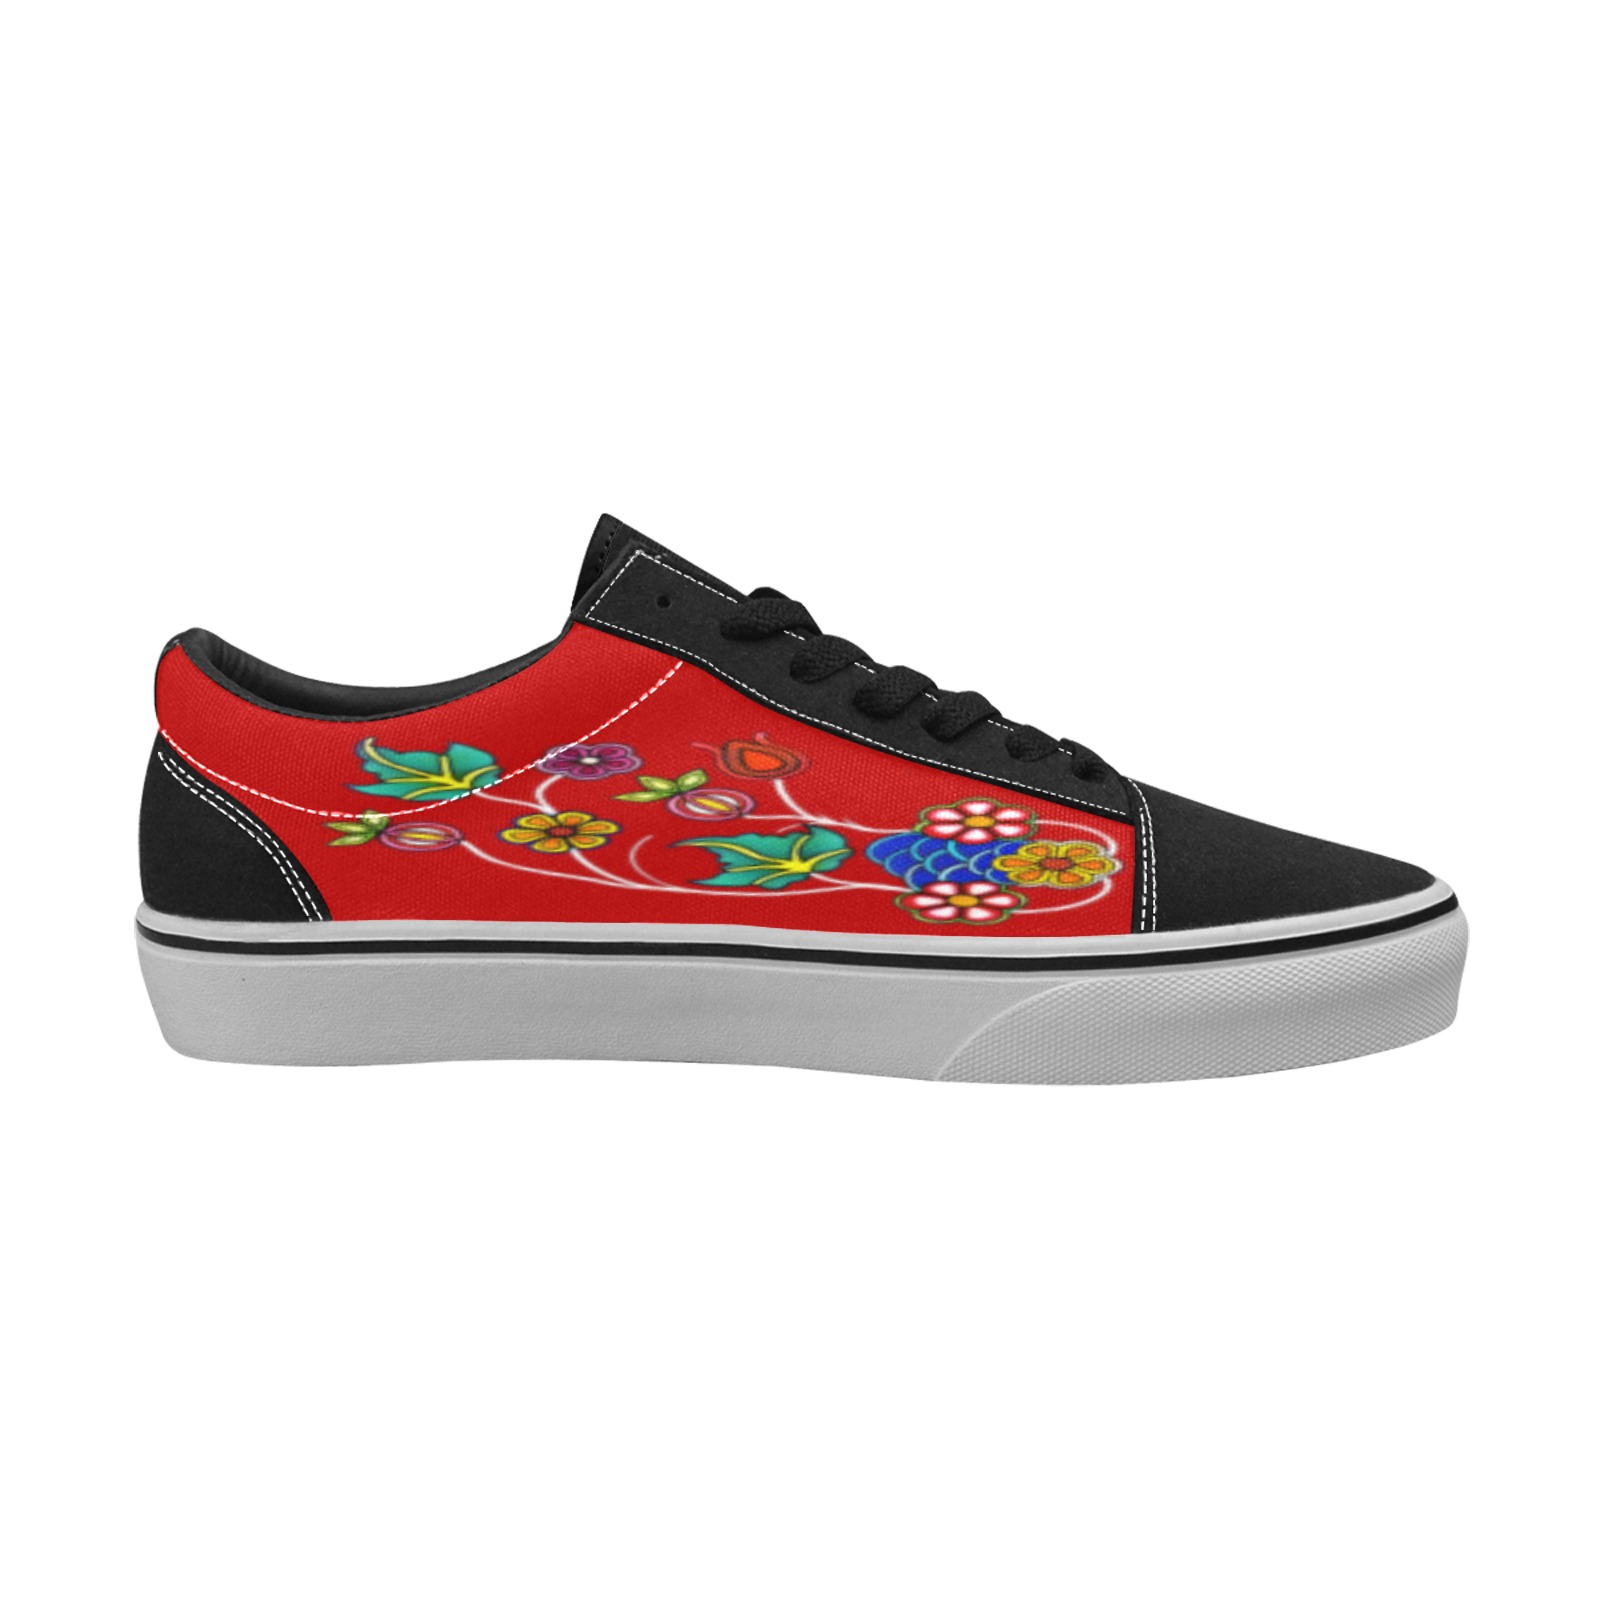 red Men's Low Top Skateboarding Shoes (Model E001-2)